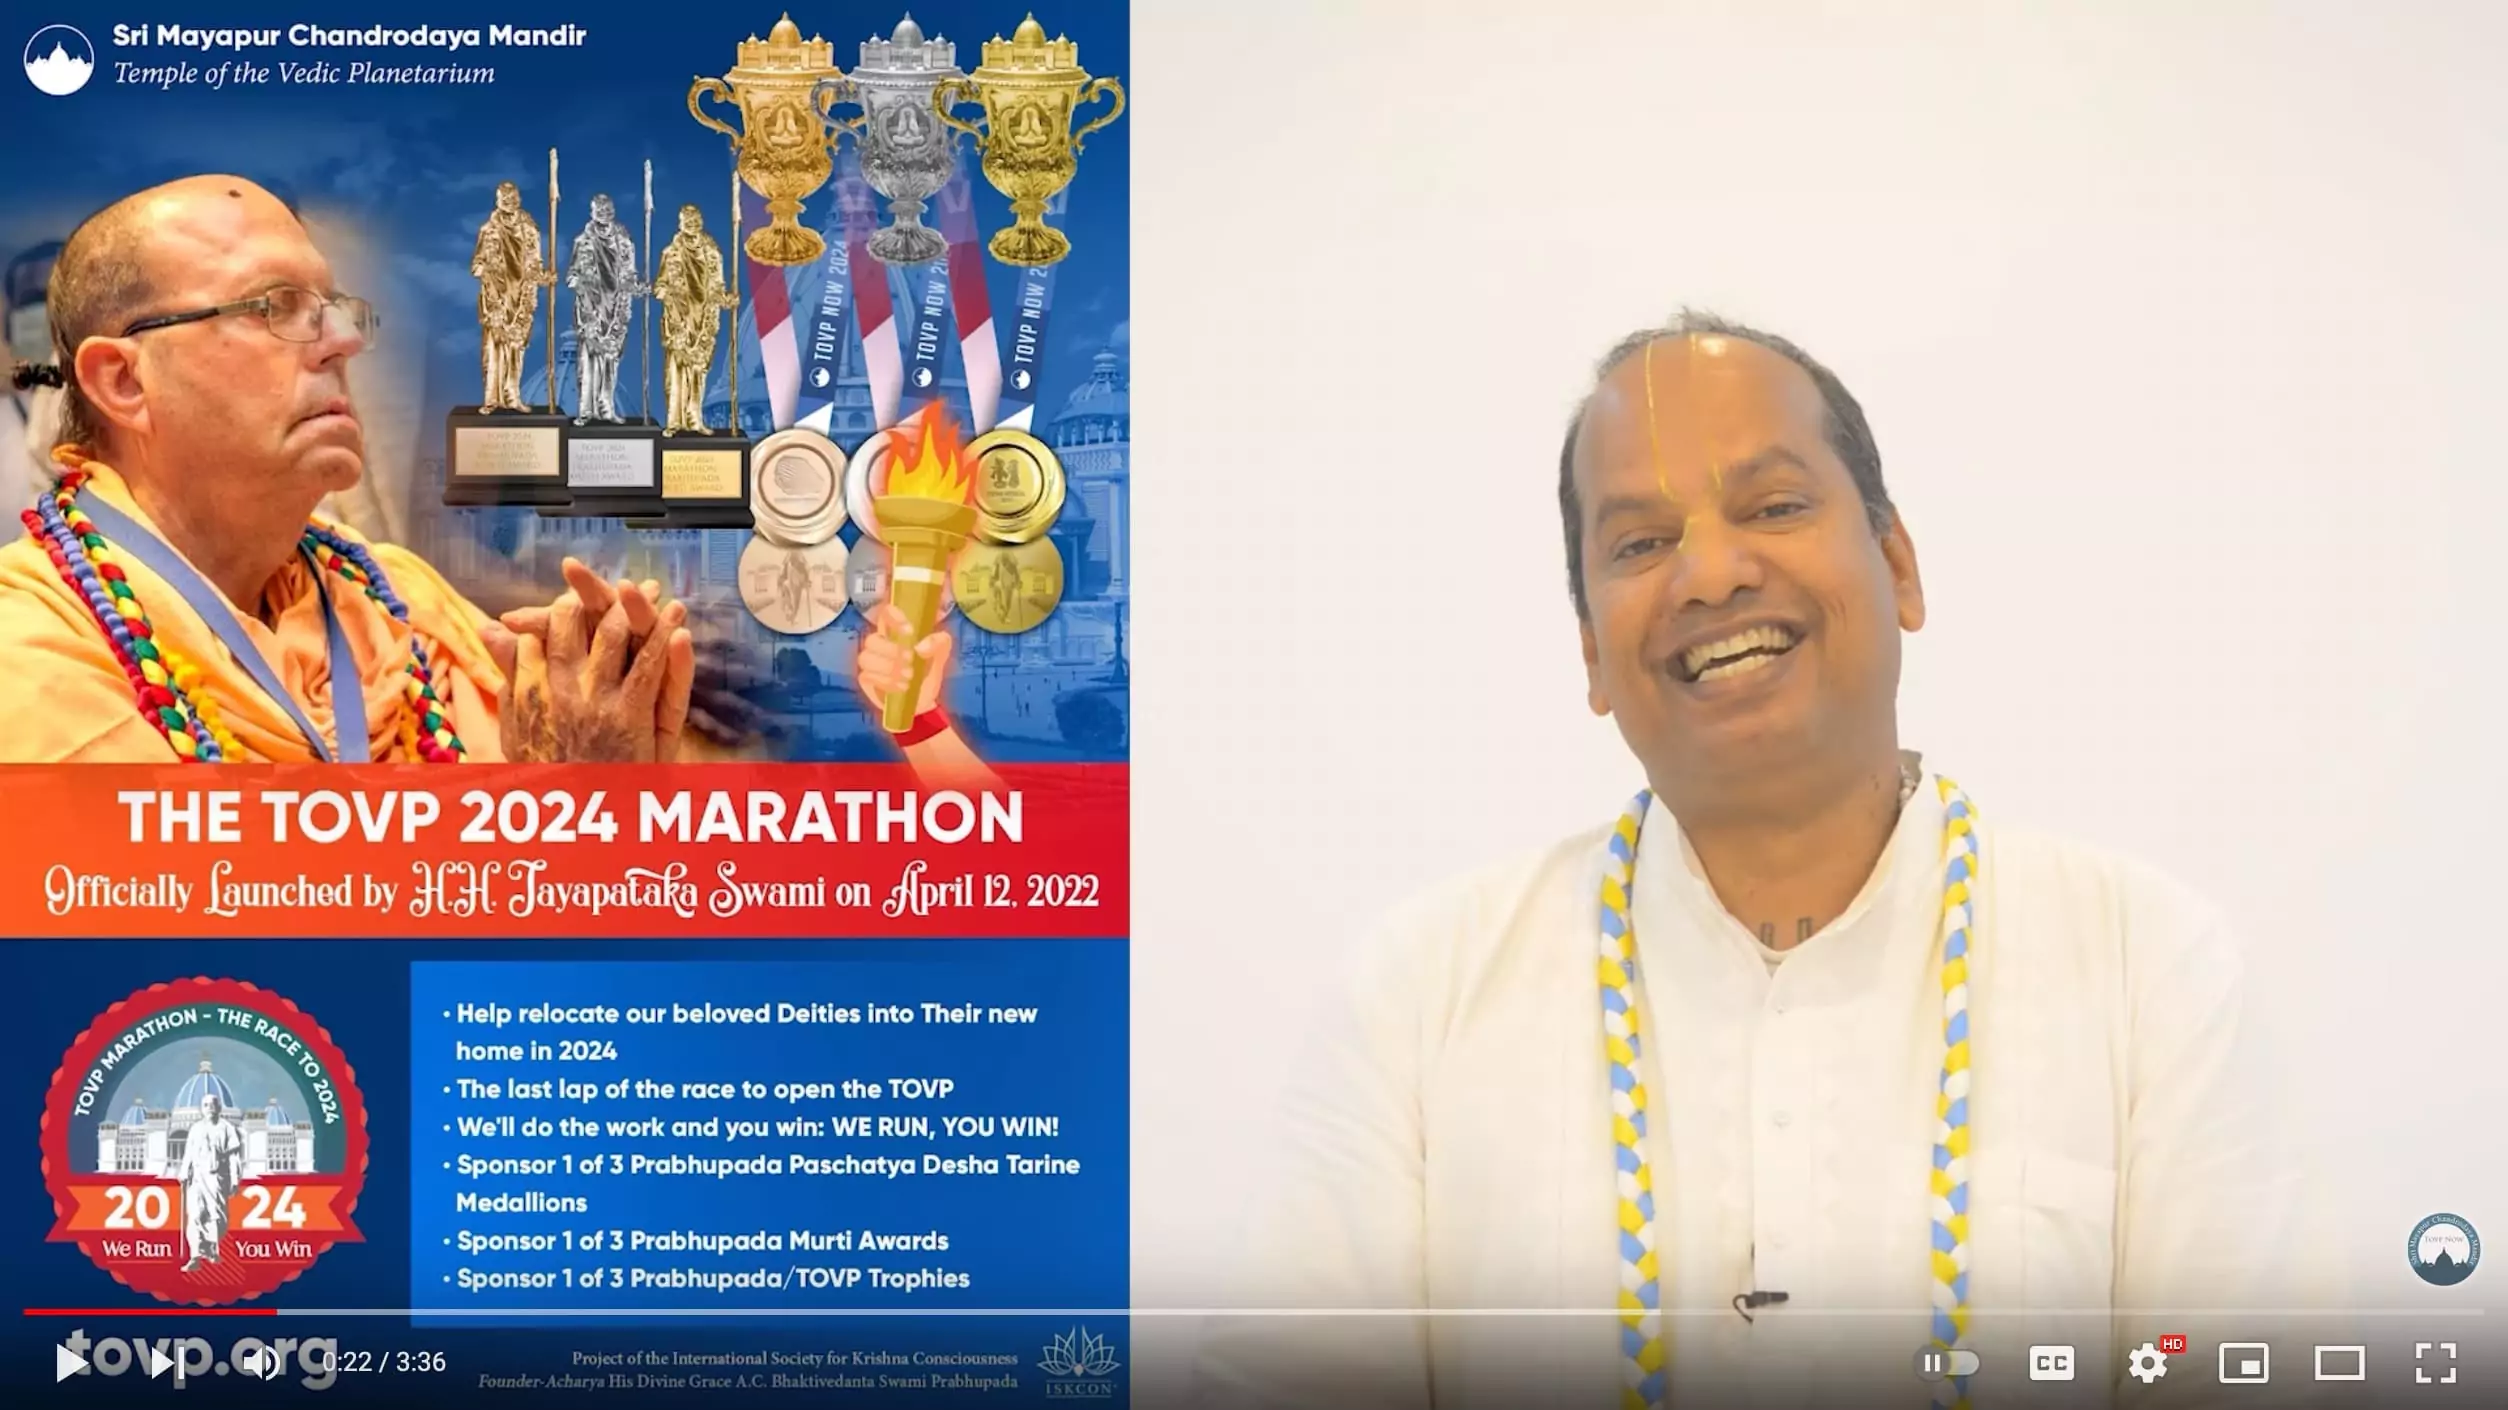 Braja Vilasa parle du marathon TOVP 2024 et de la collecte de fonds de 12 jours #GivingToNrsimha : 3 mai (Akshaya Tritiya) - 15 mai (Nrsimha Caturdasi)